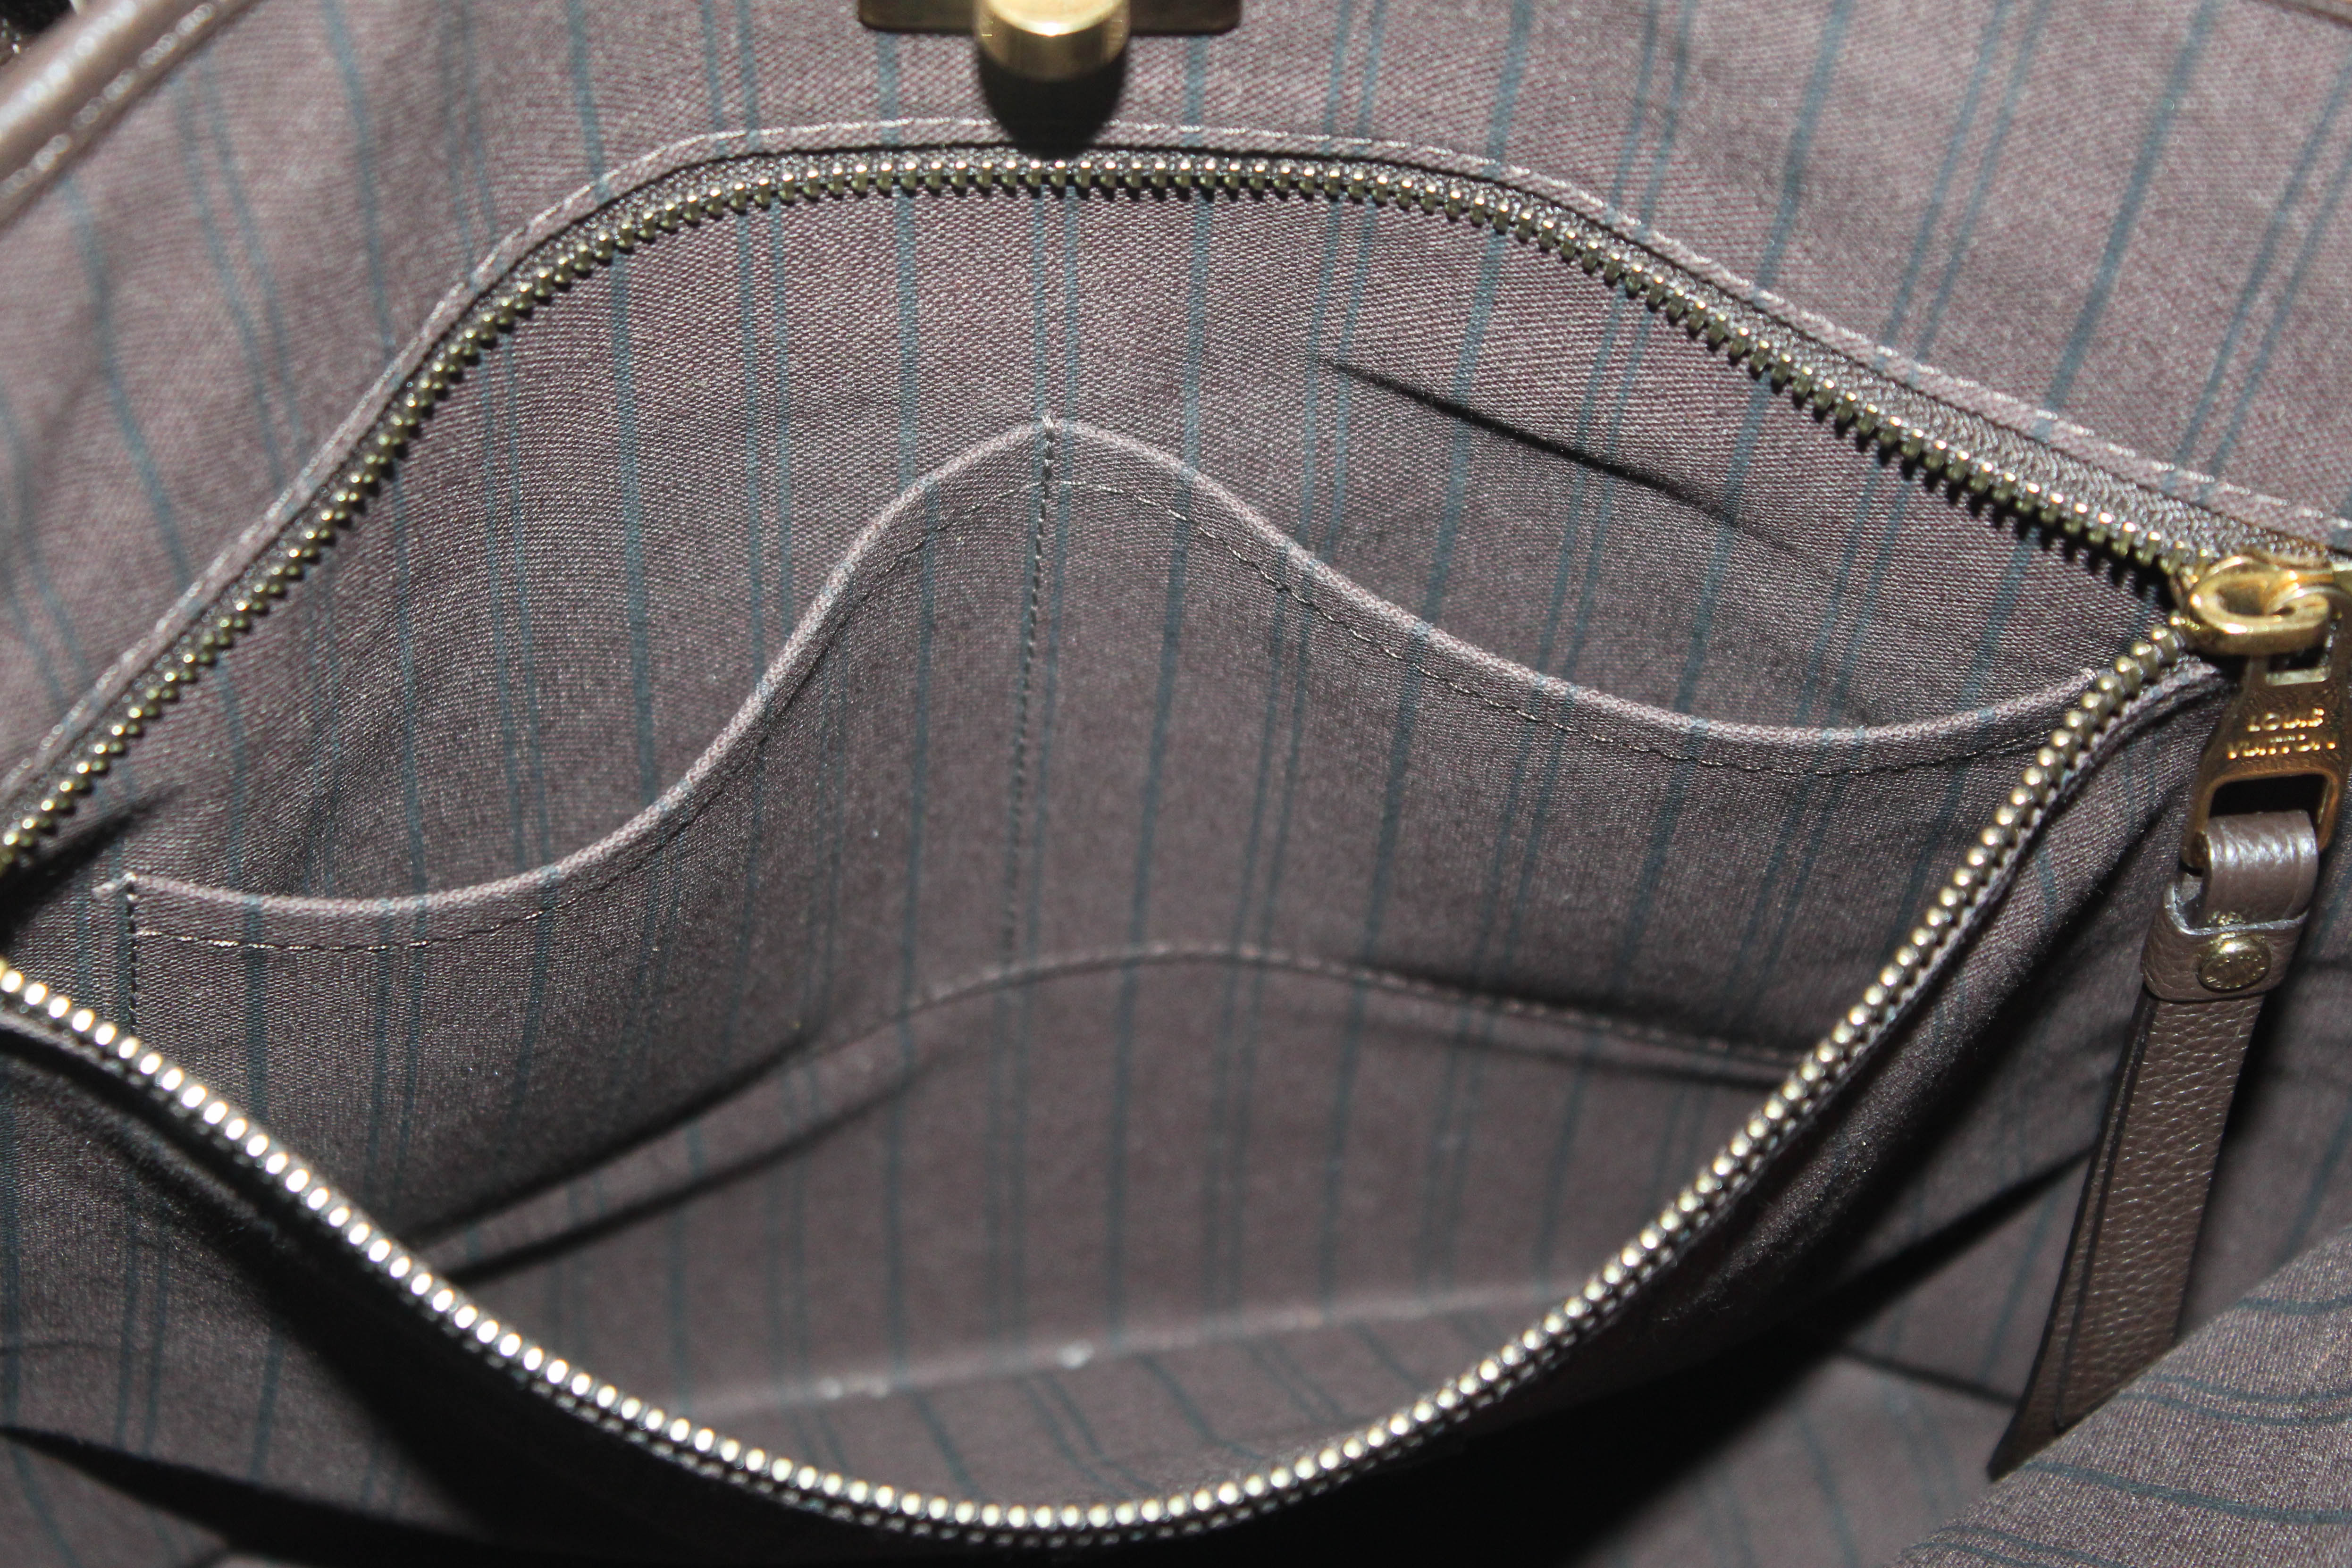 Louis Vuitton Citadine Monogram Empreinte Leather Tote + Pouch